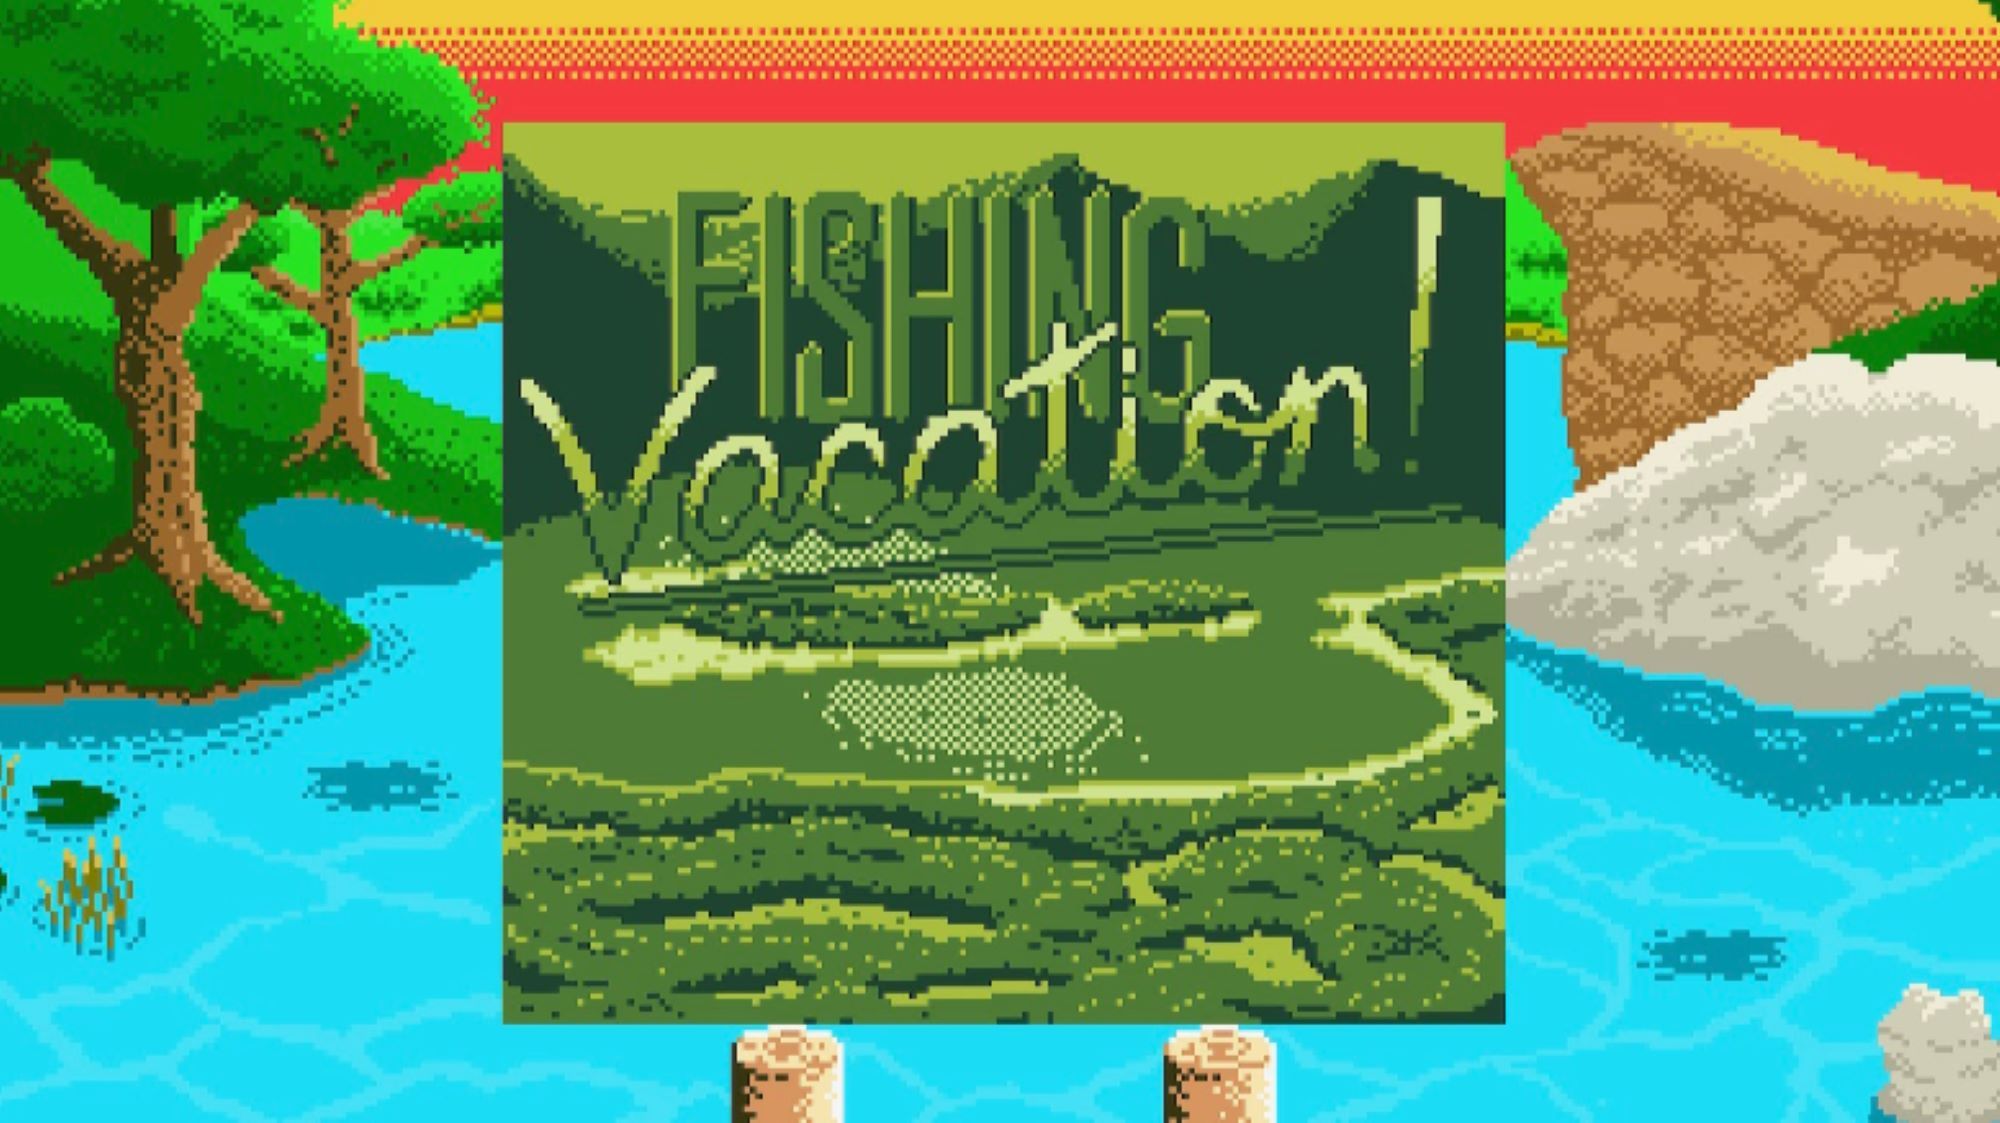 Fishing Village title card